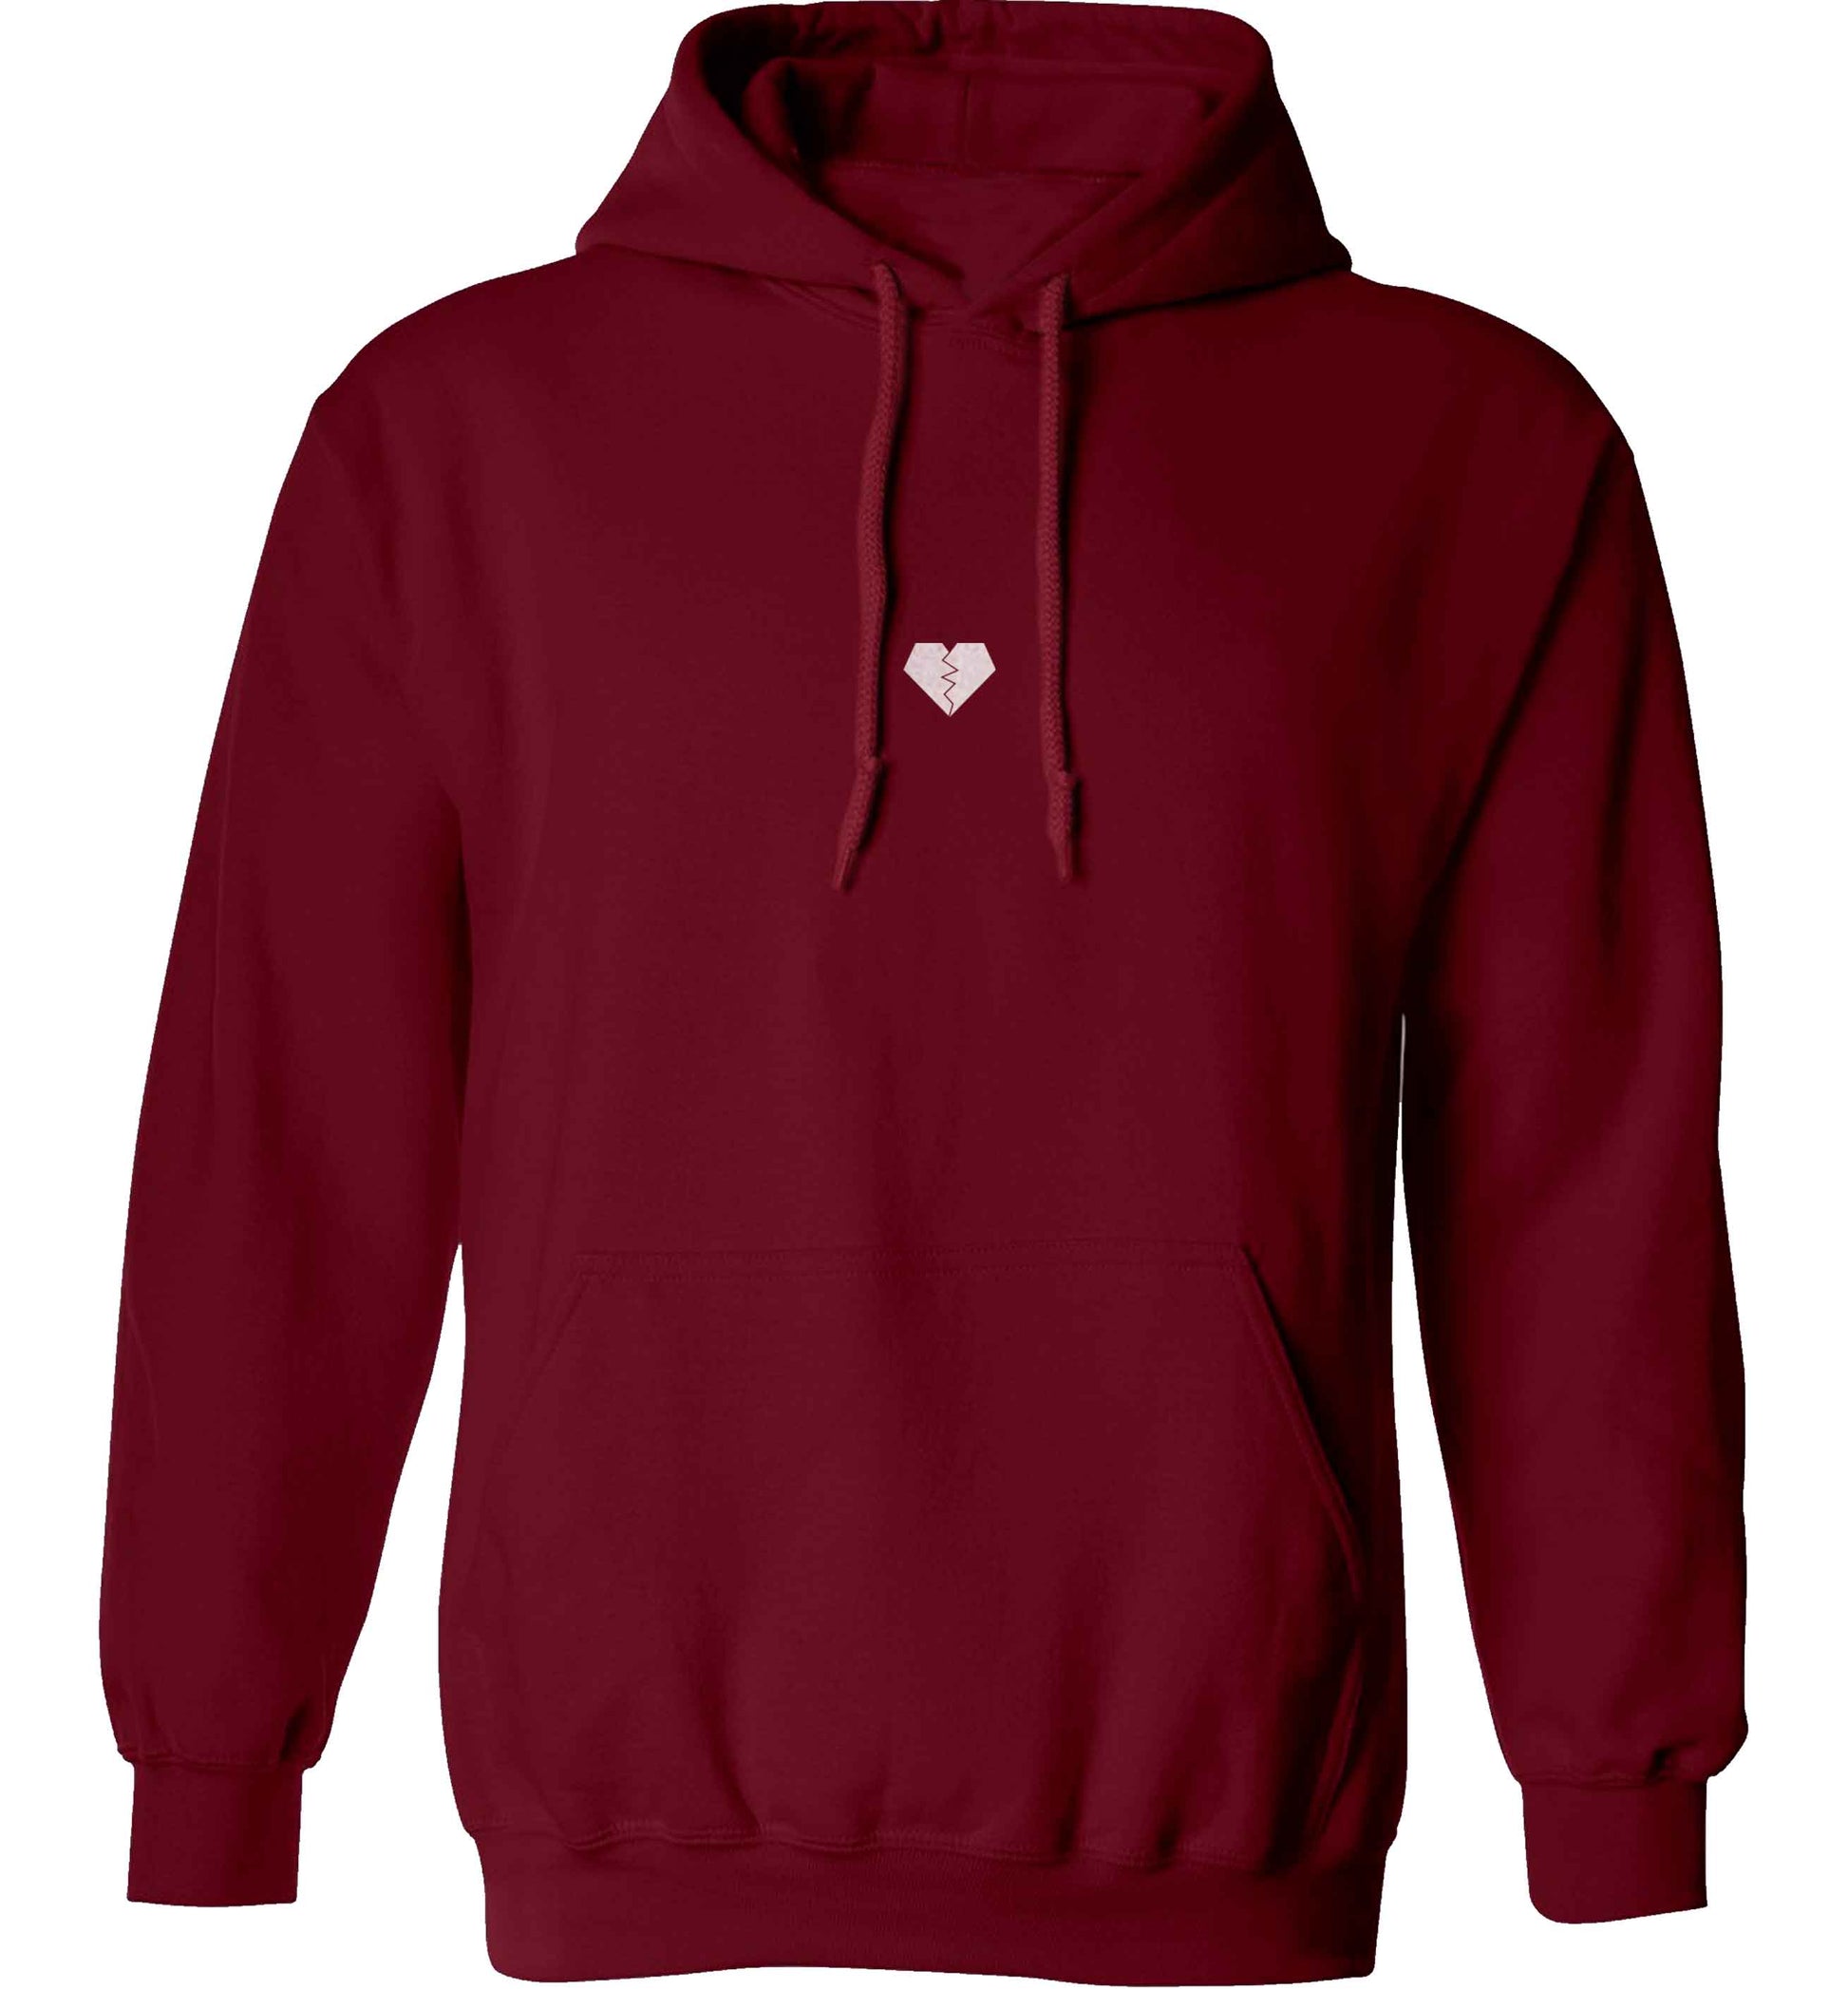 Tiny broken heart adults unisex maroon hoodie 2XL